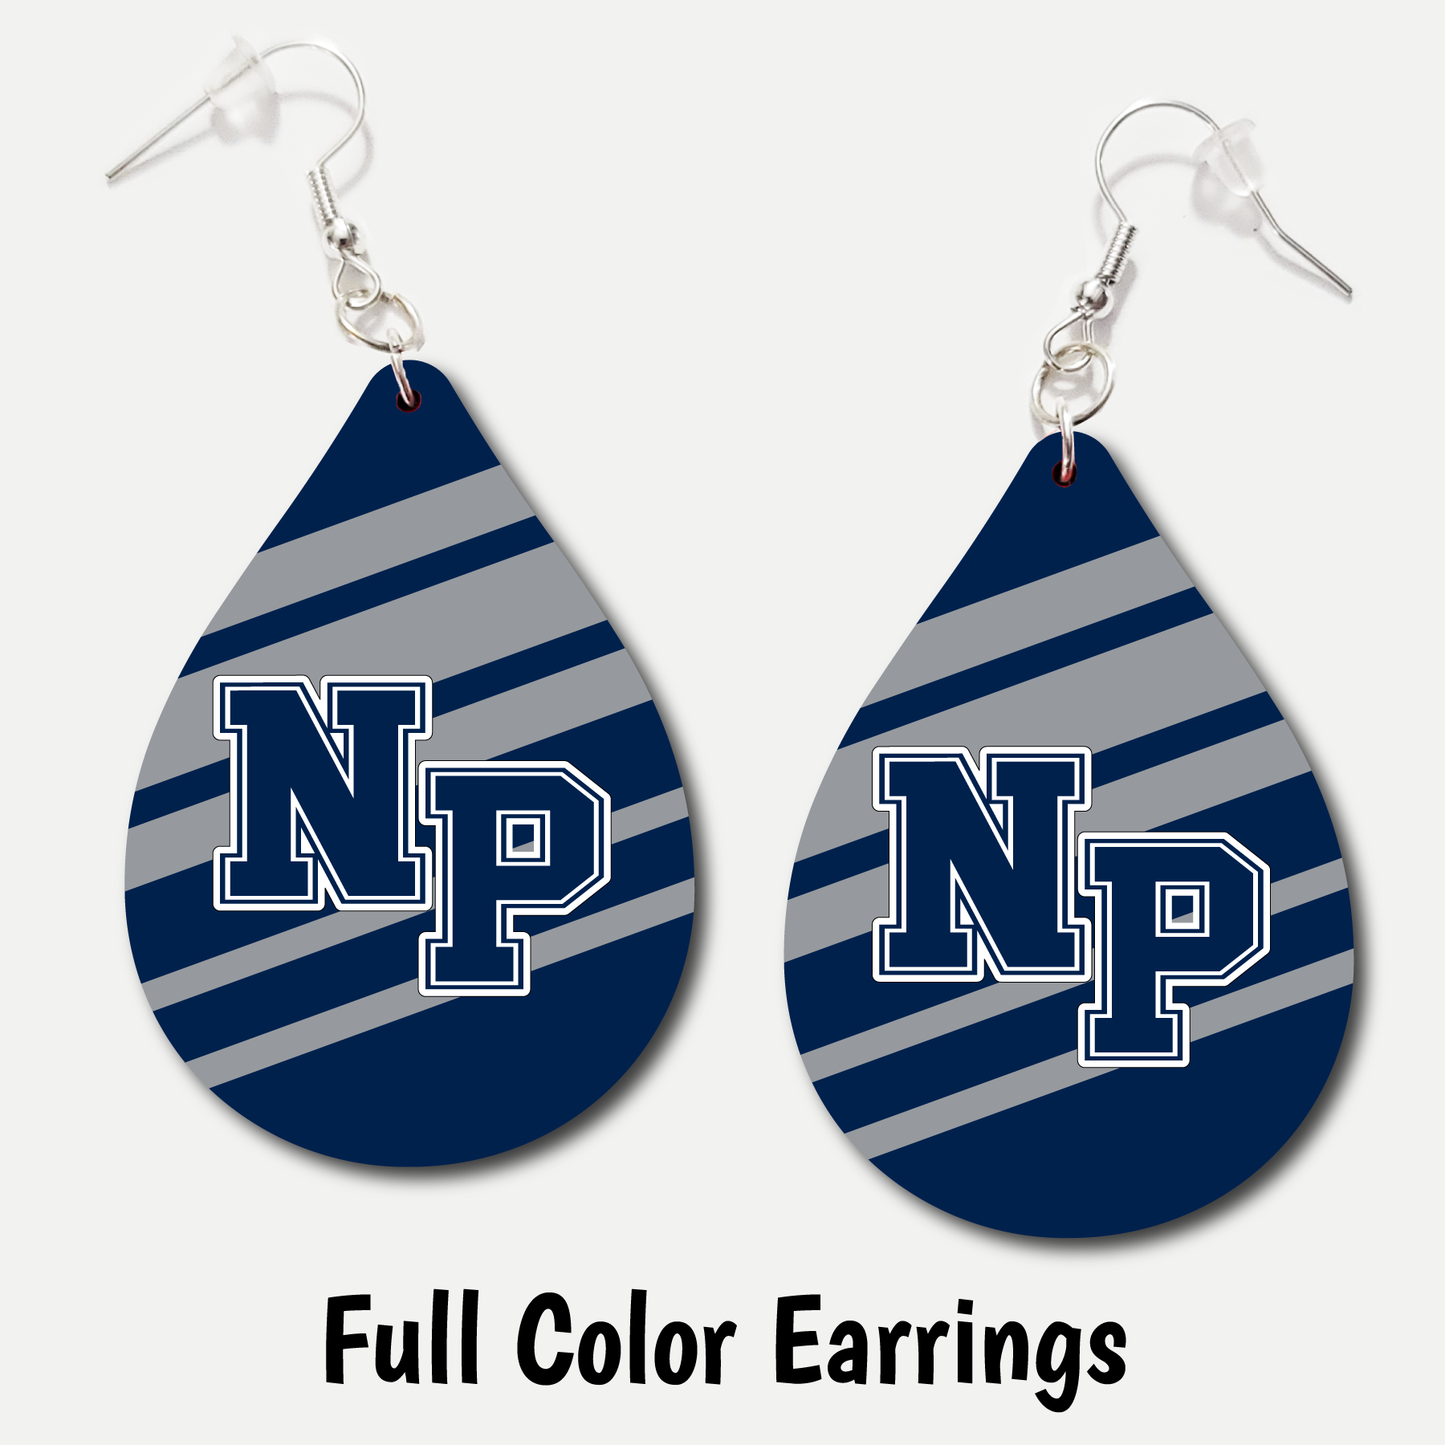 New Plymouth Pilgrims - Full Color Earrings